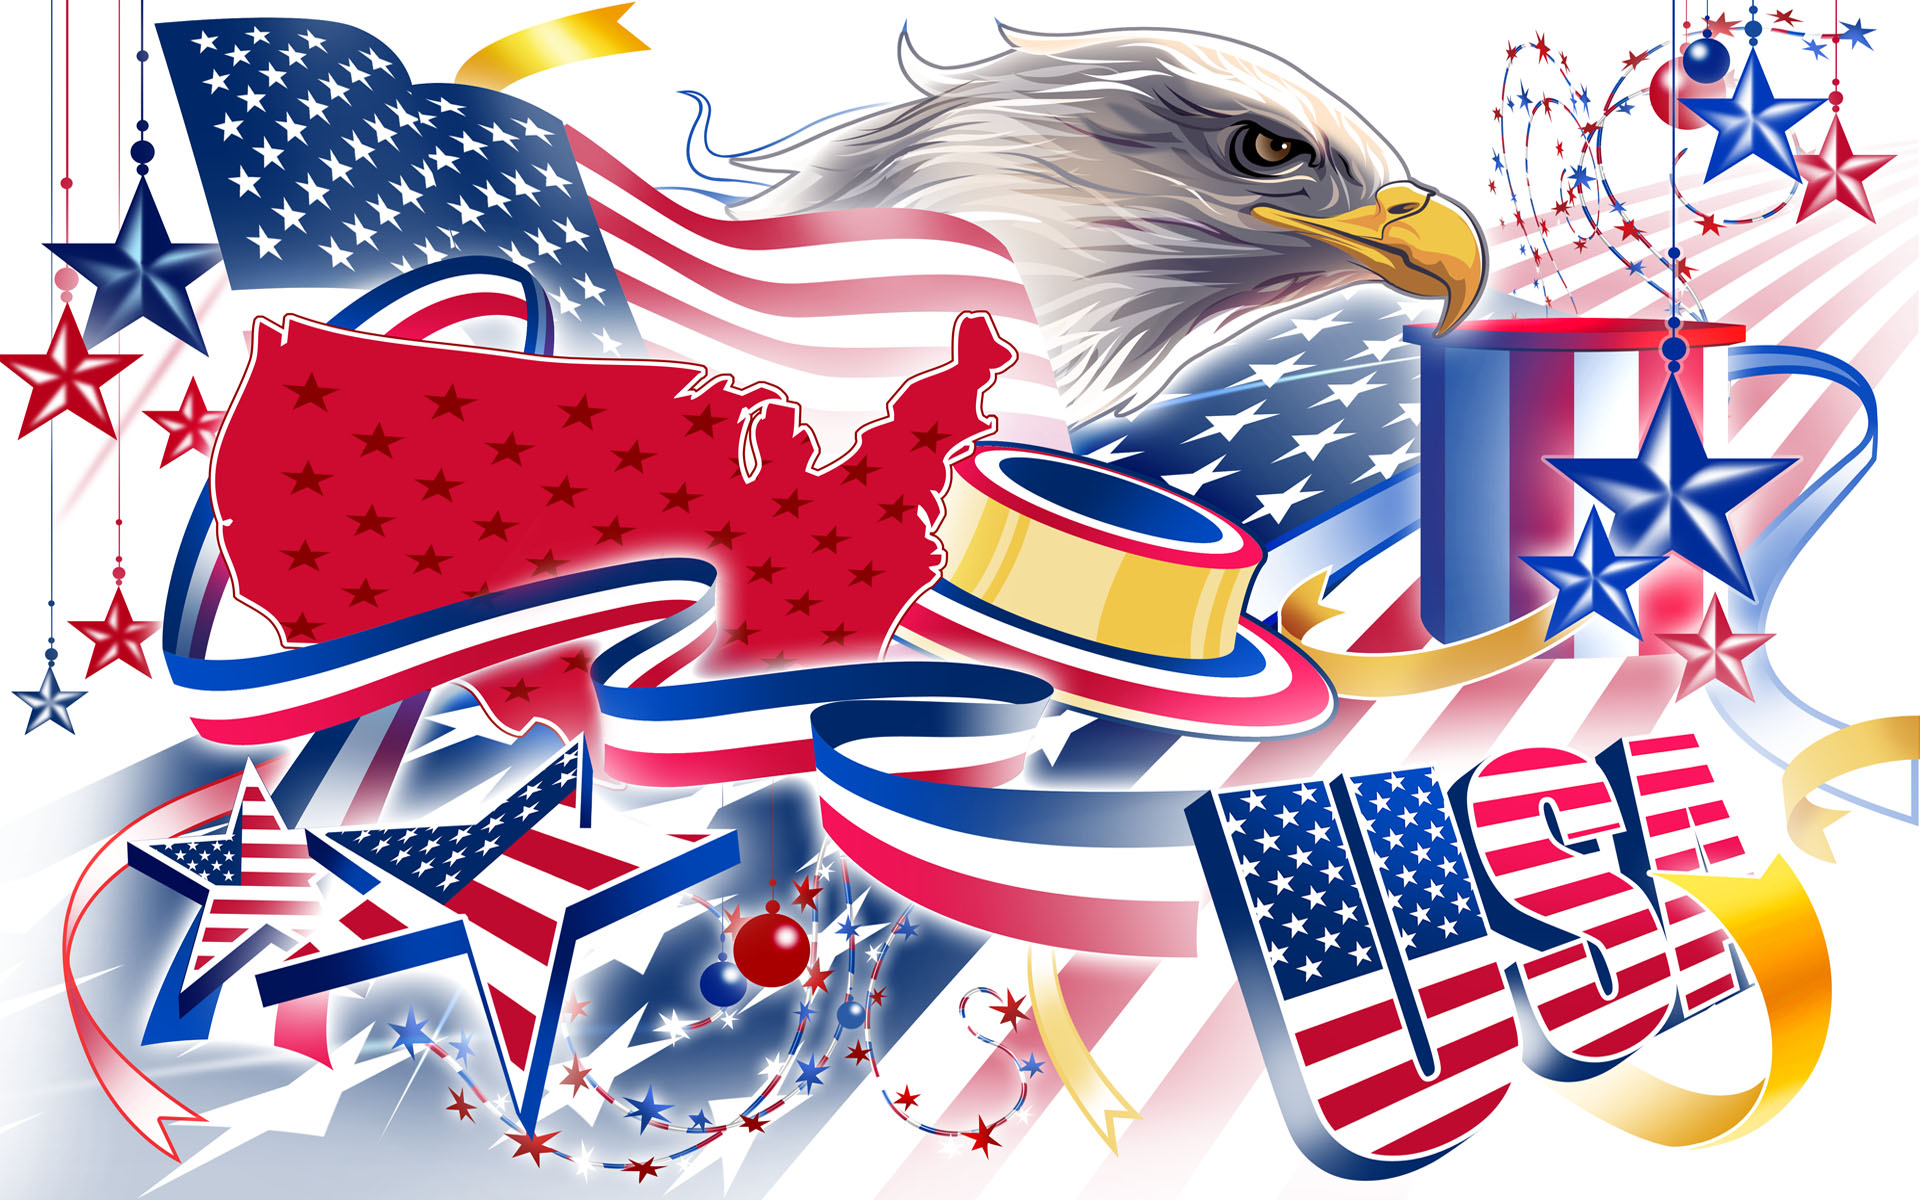 Previous, World - USA - American Eagle USA wallpaper